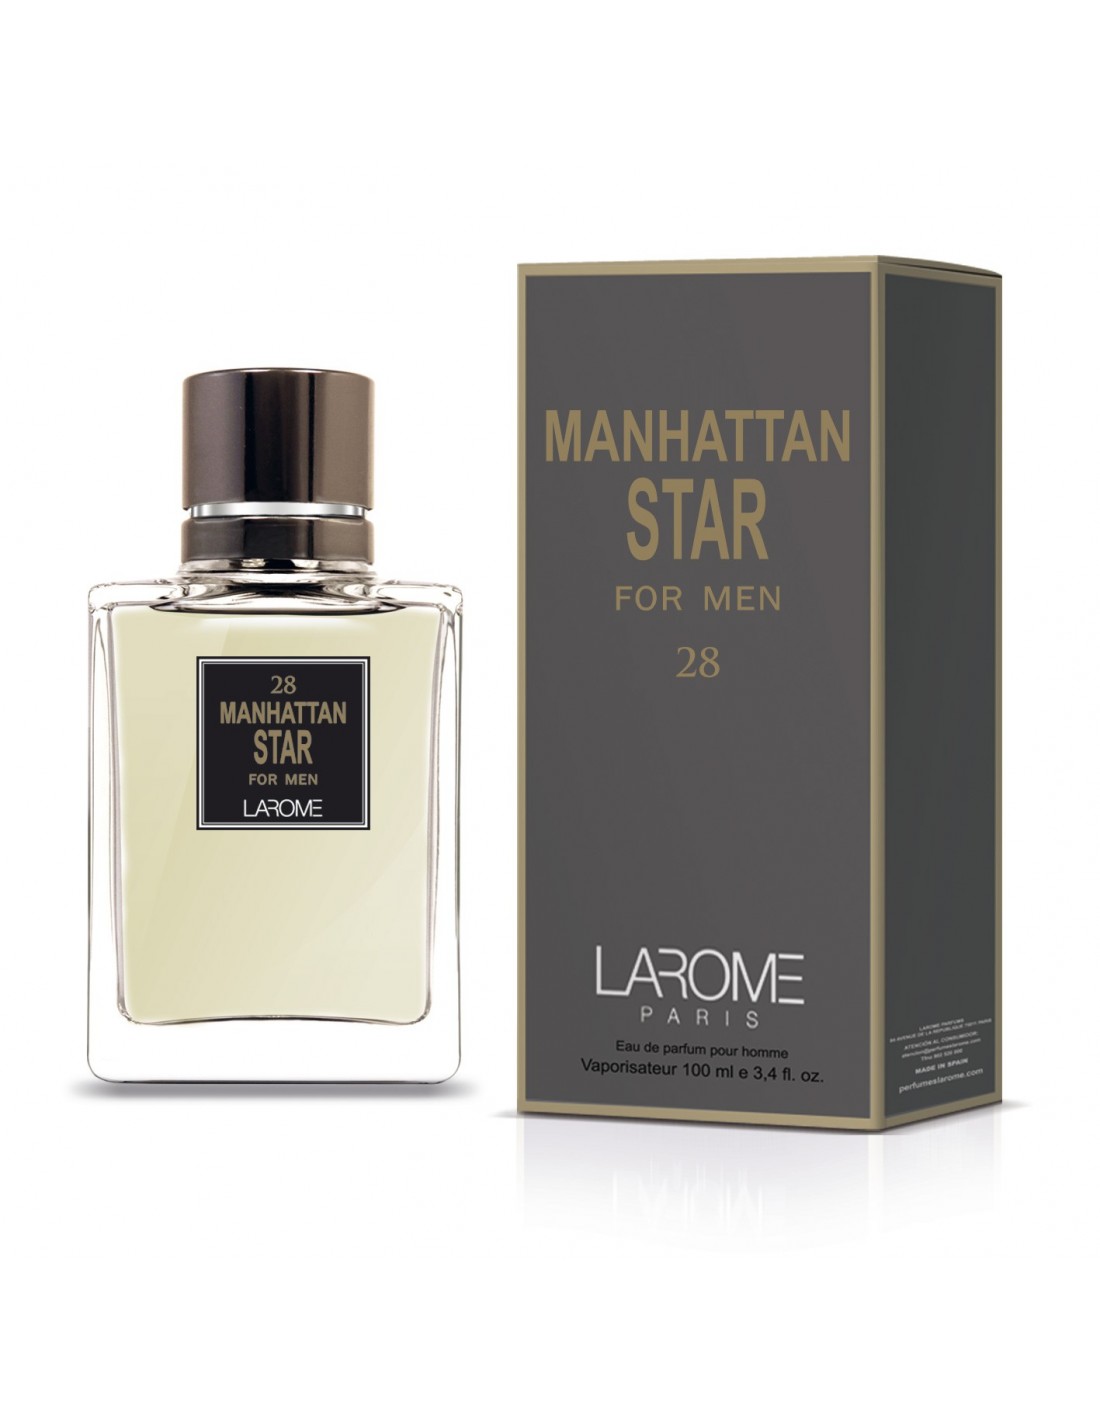 of stars perfume